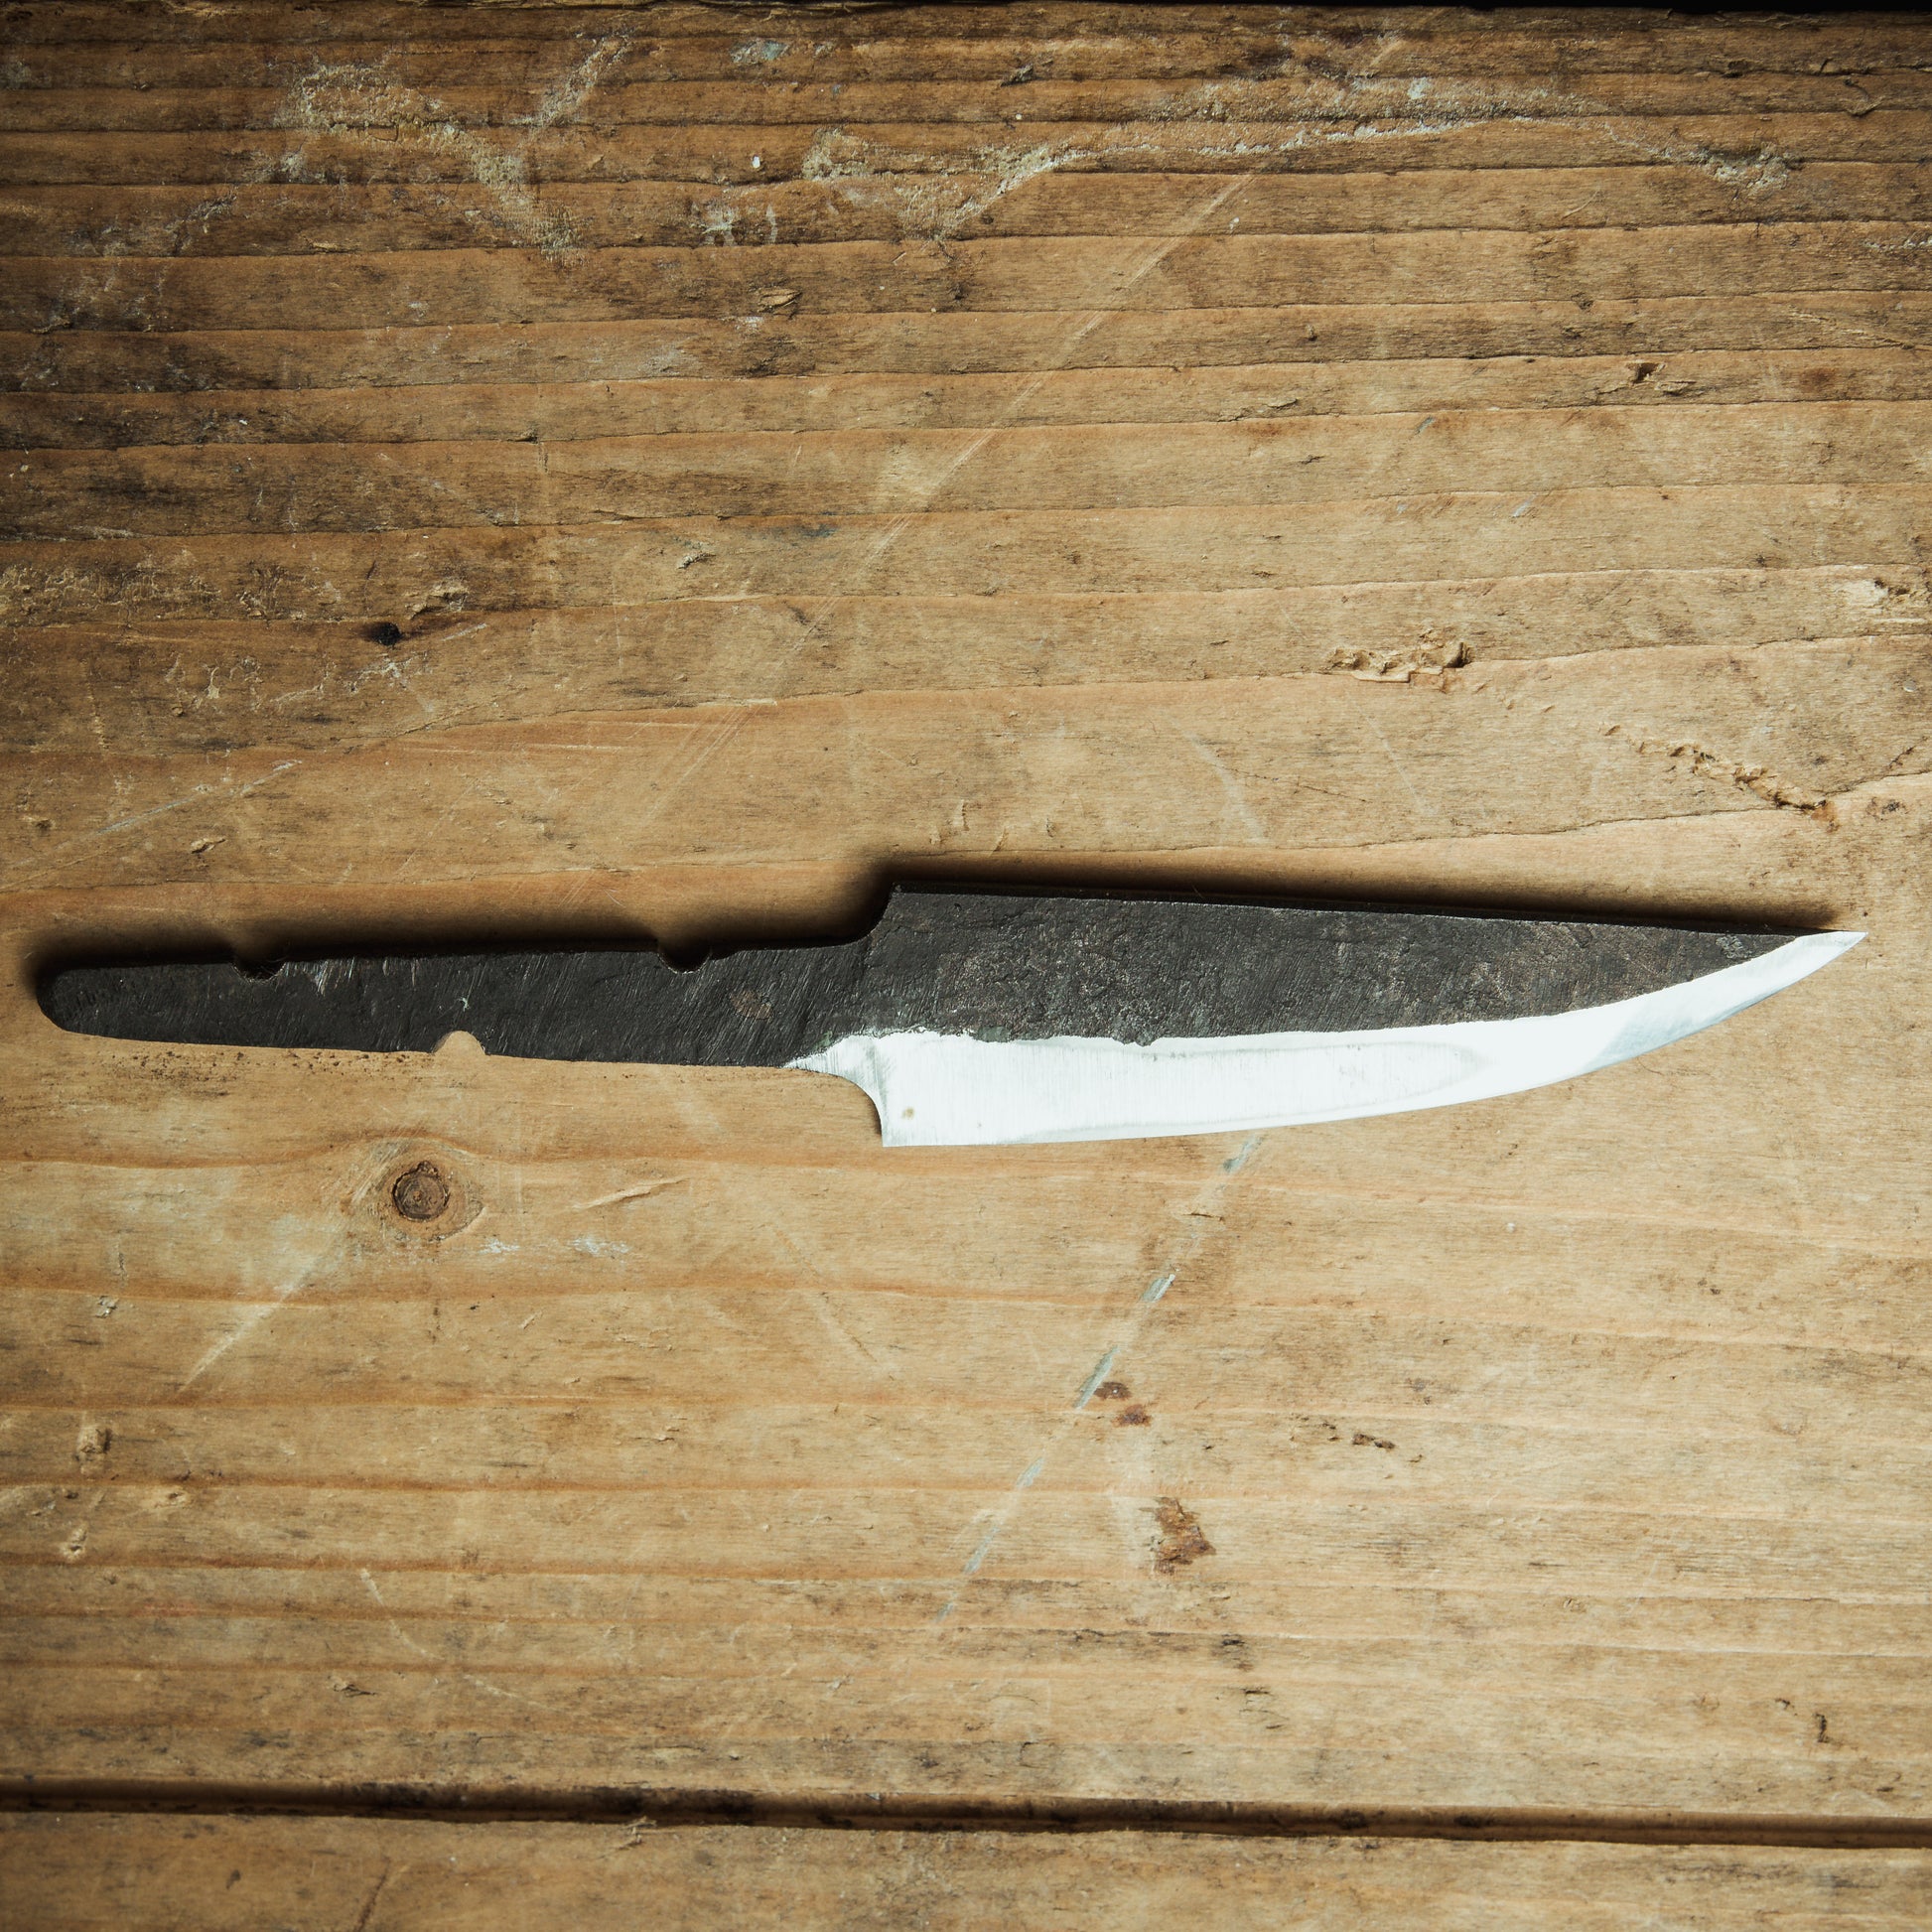 carving knife, Whittling / sloyd blade handforged